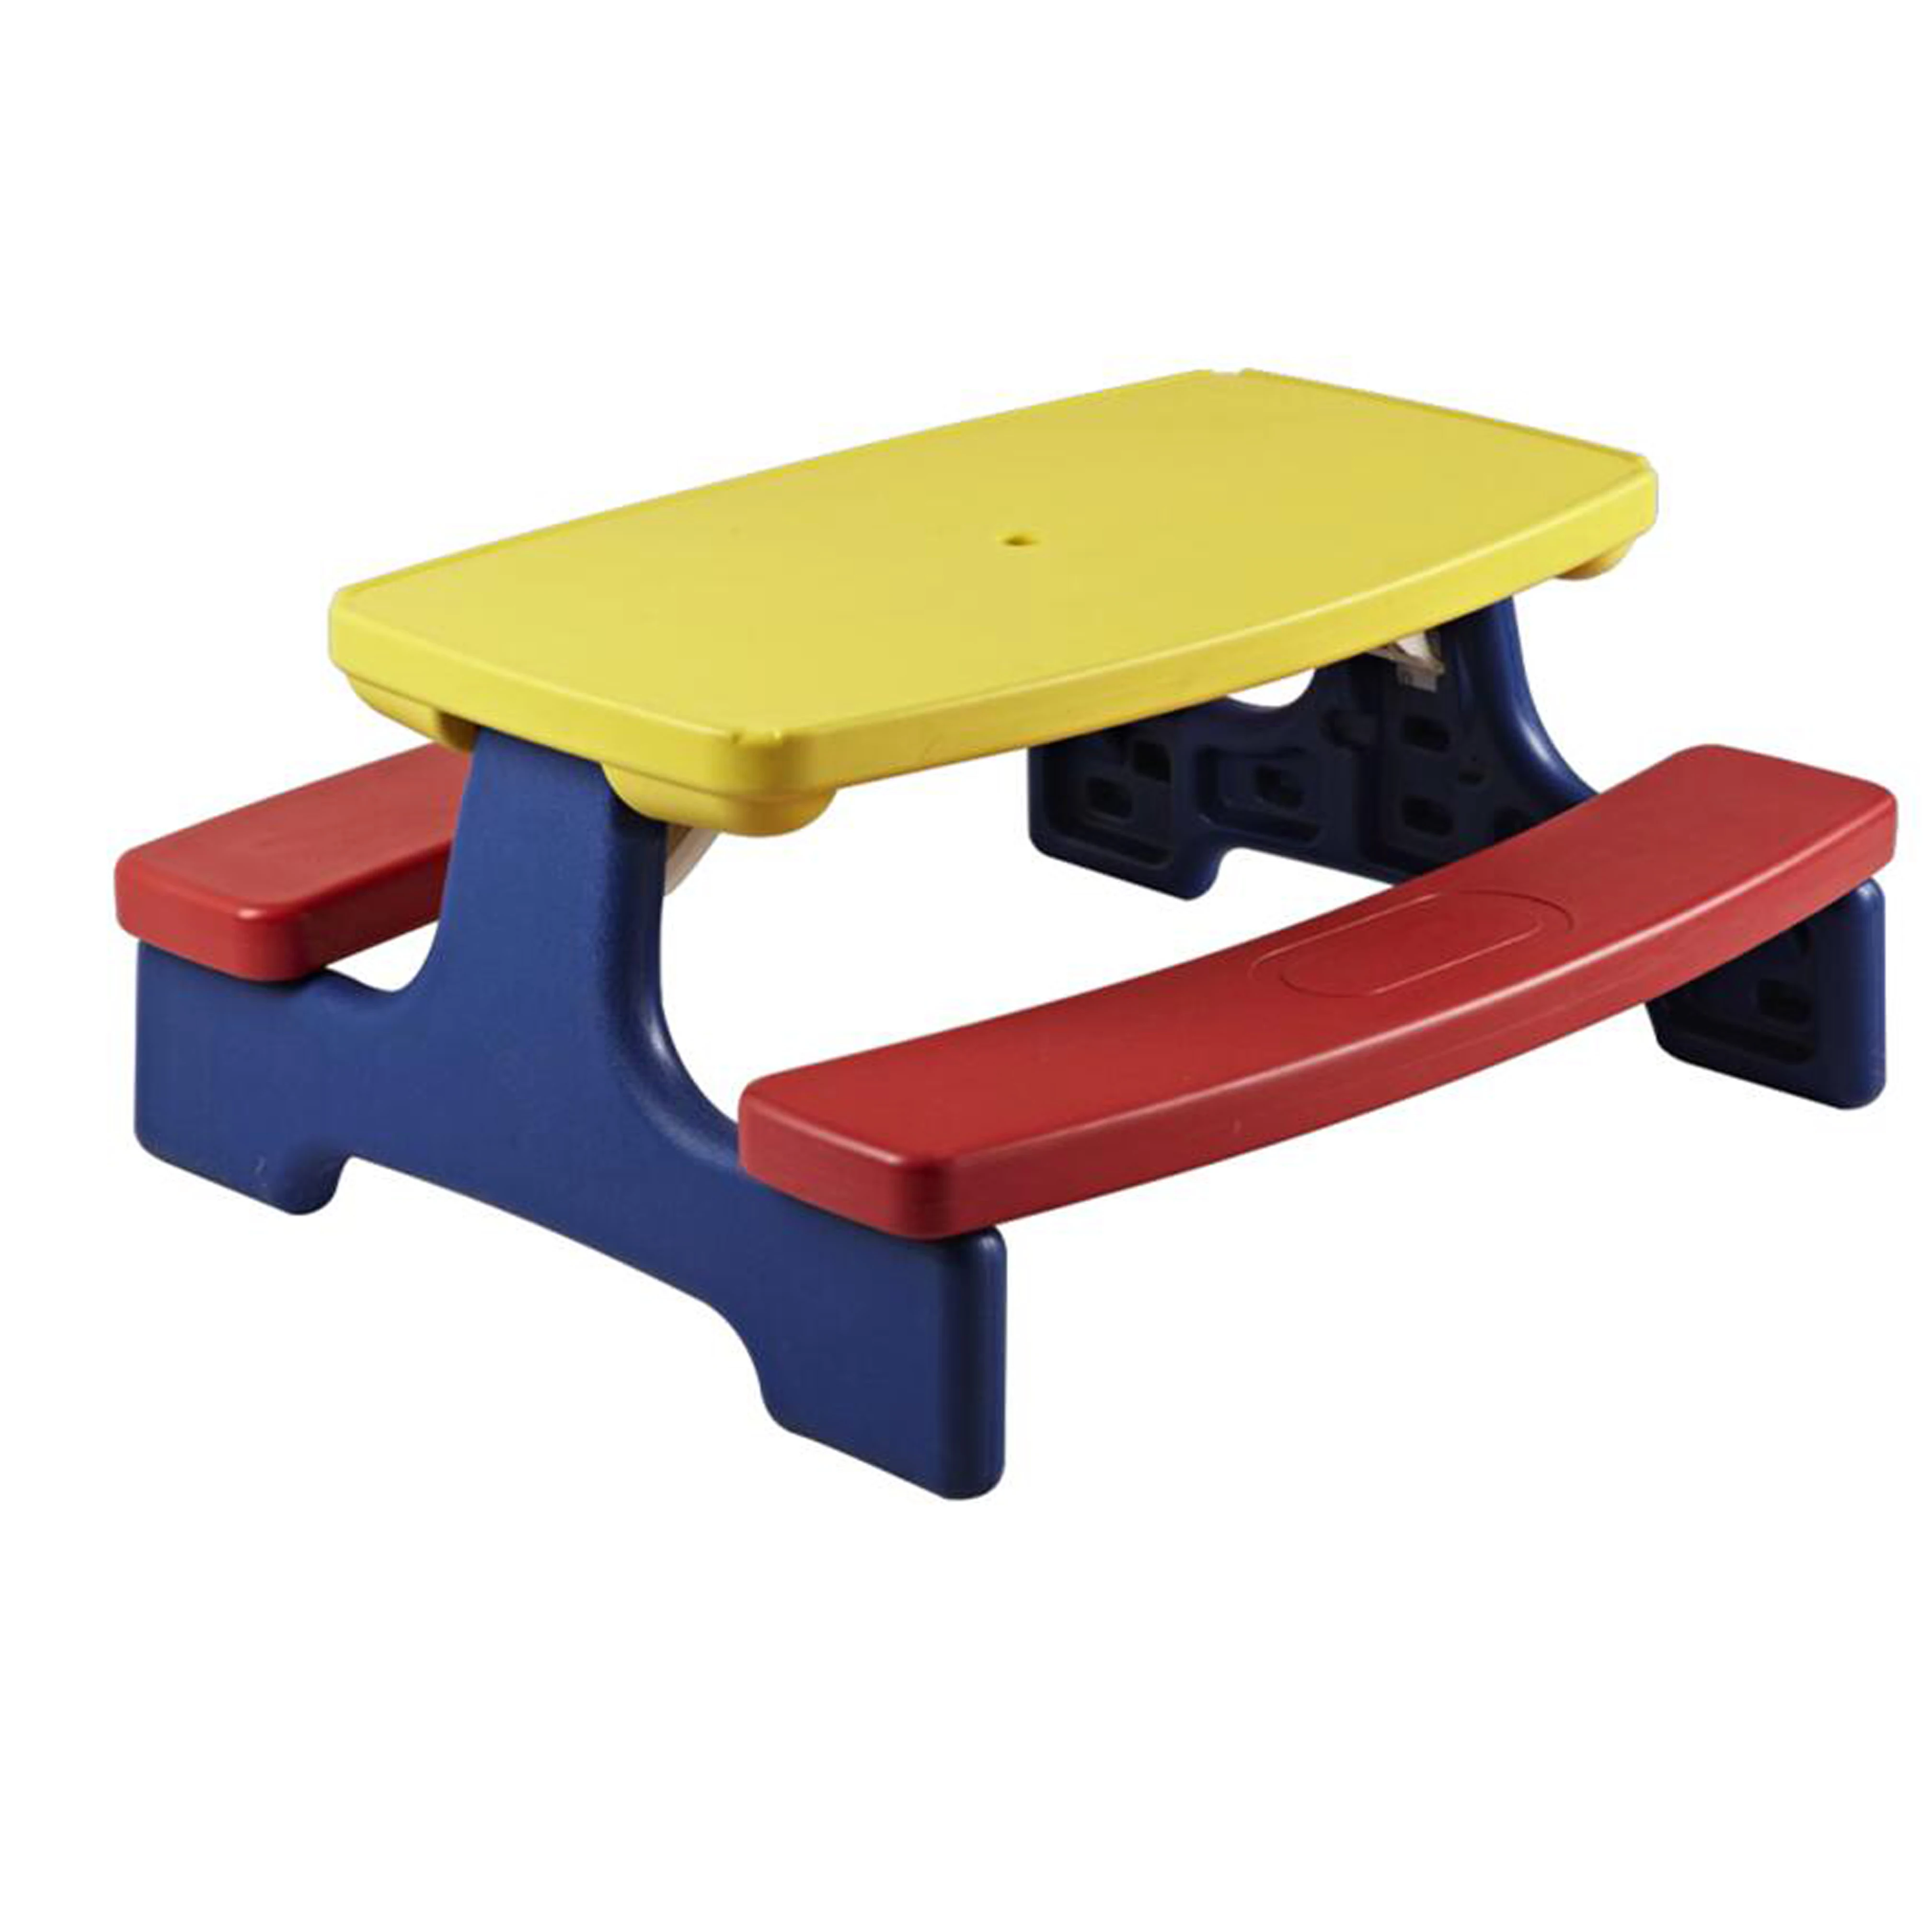 outdoor kids table